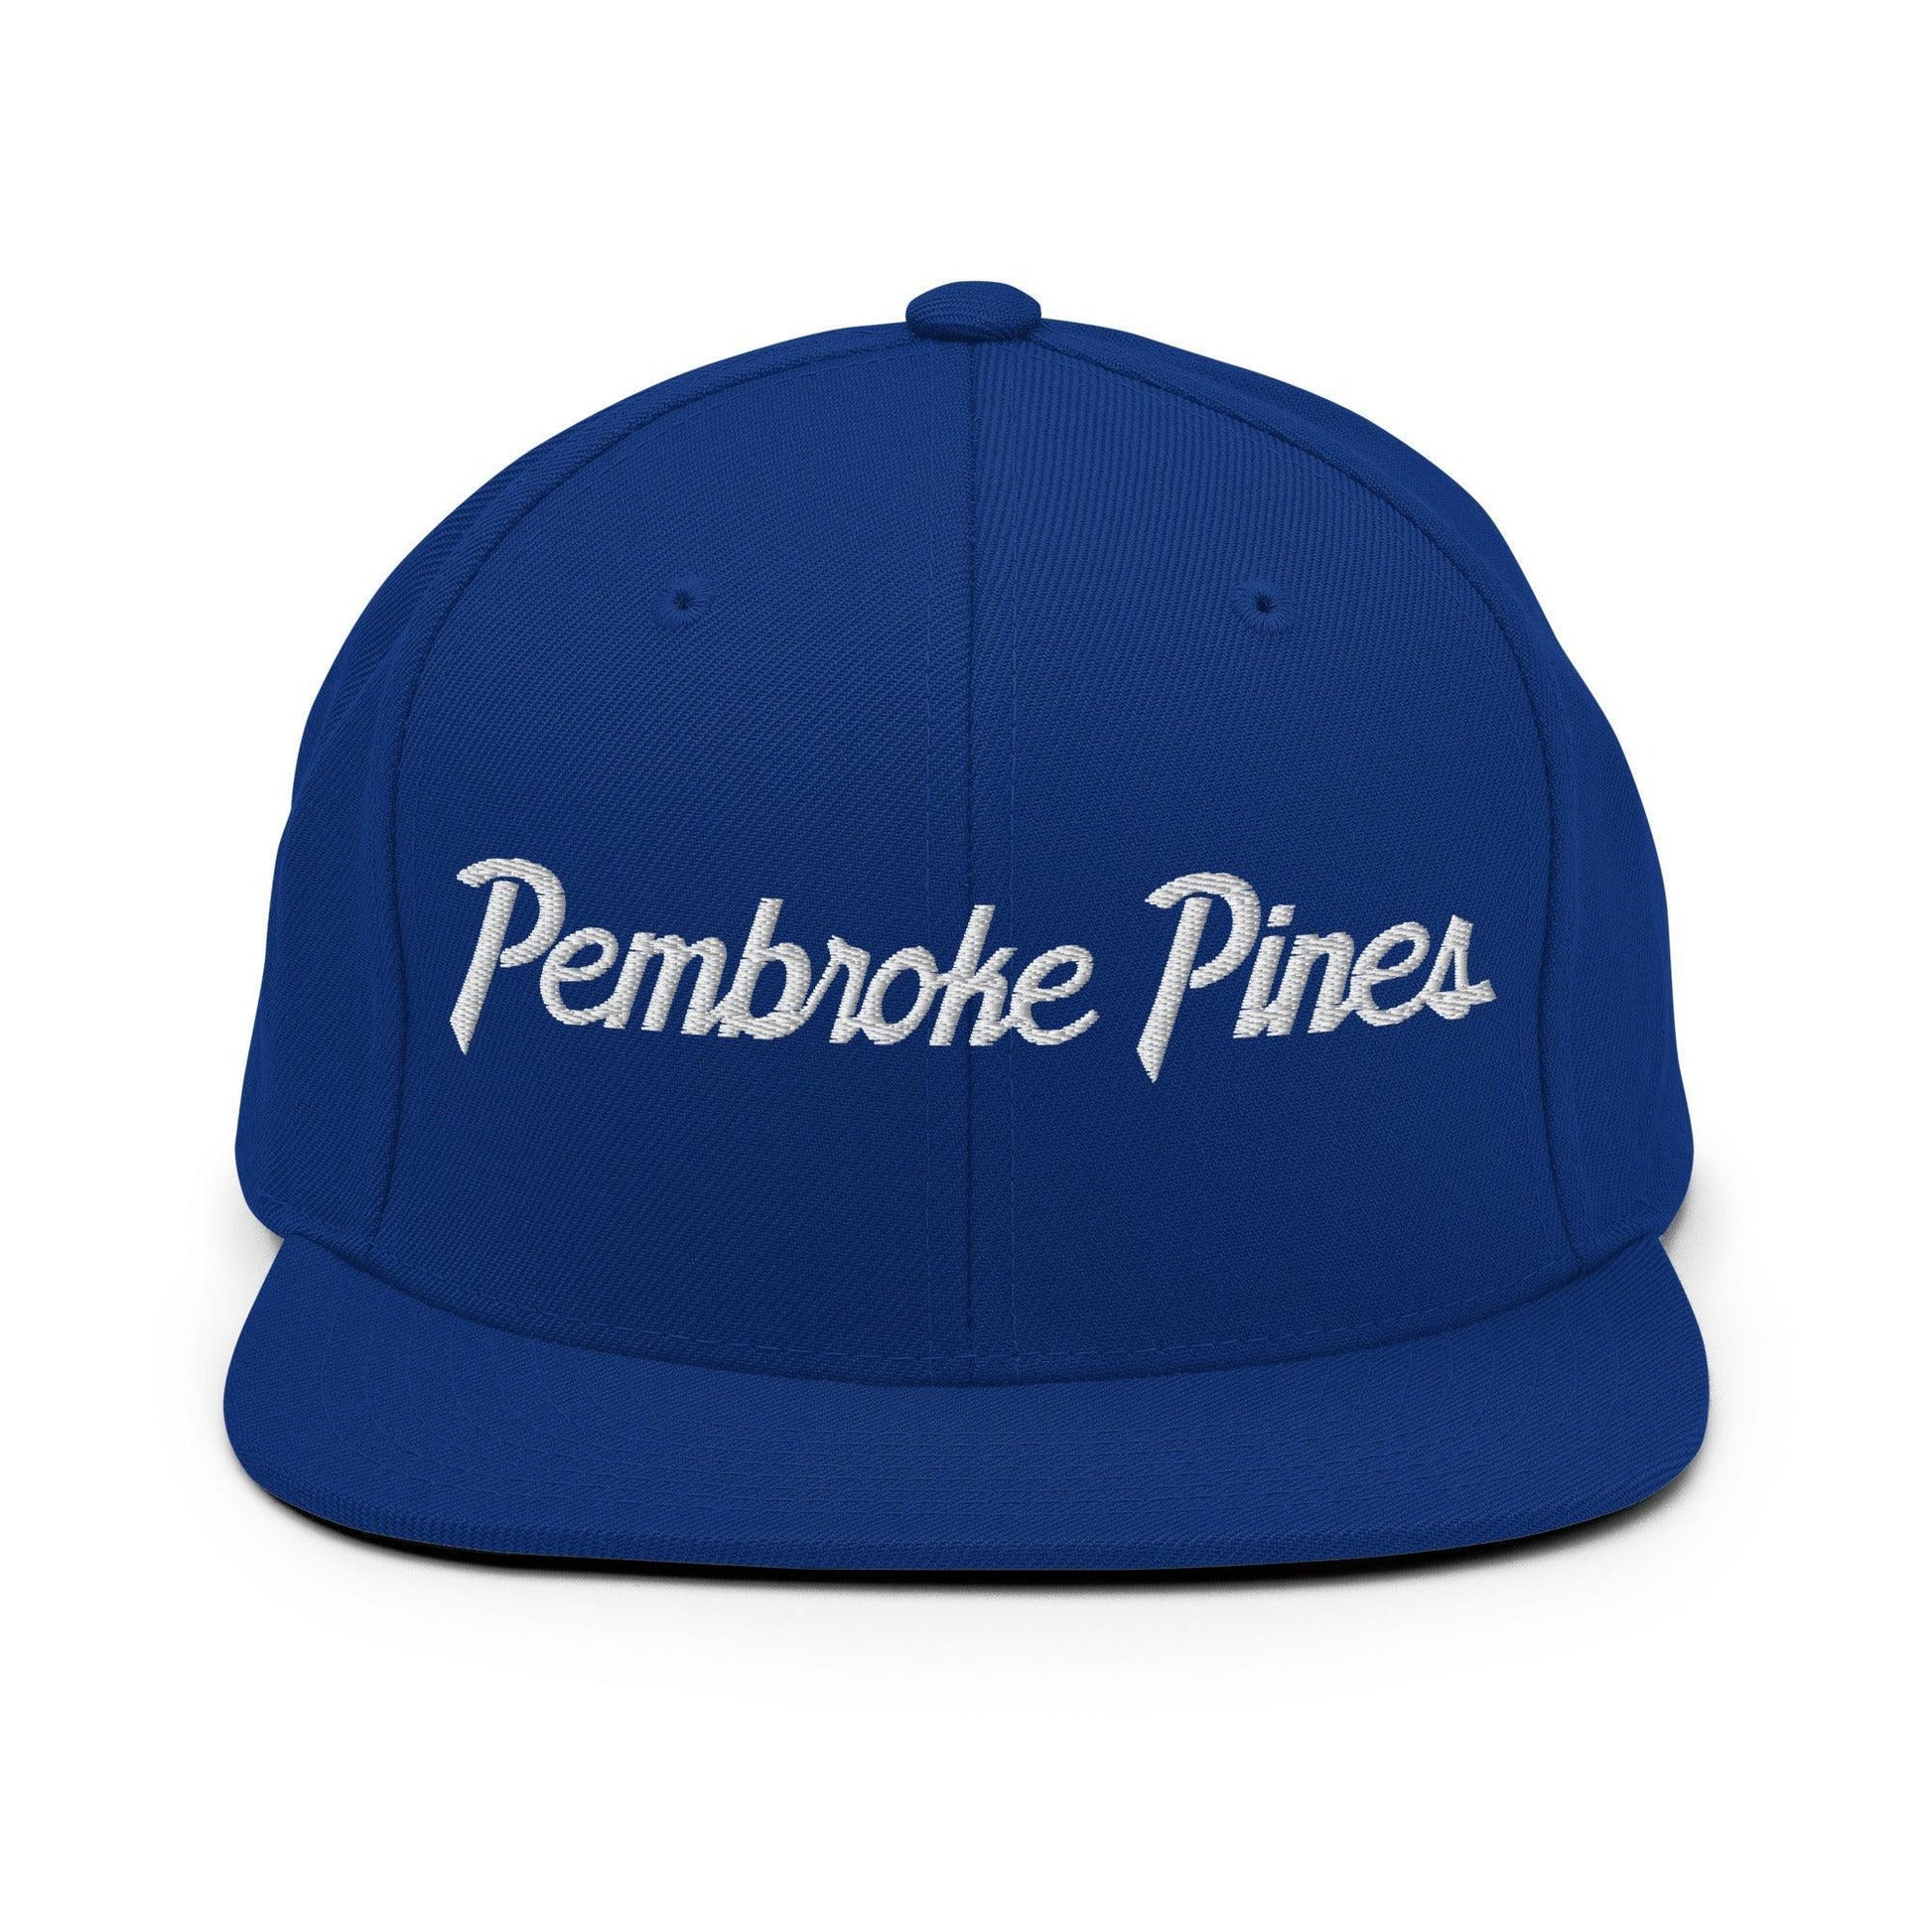 Pembroke Pines Script Snapback Hat Royal Blue